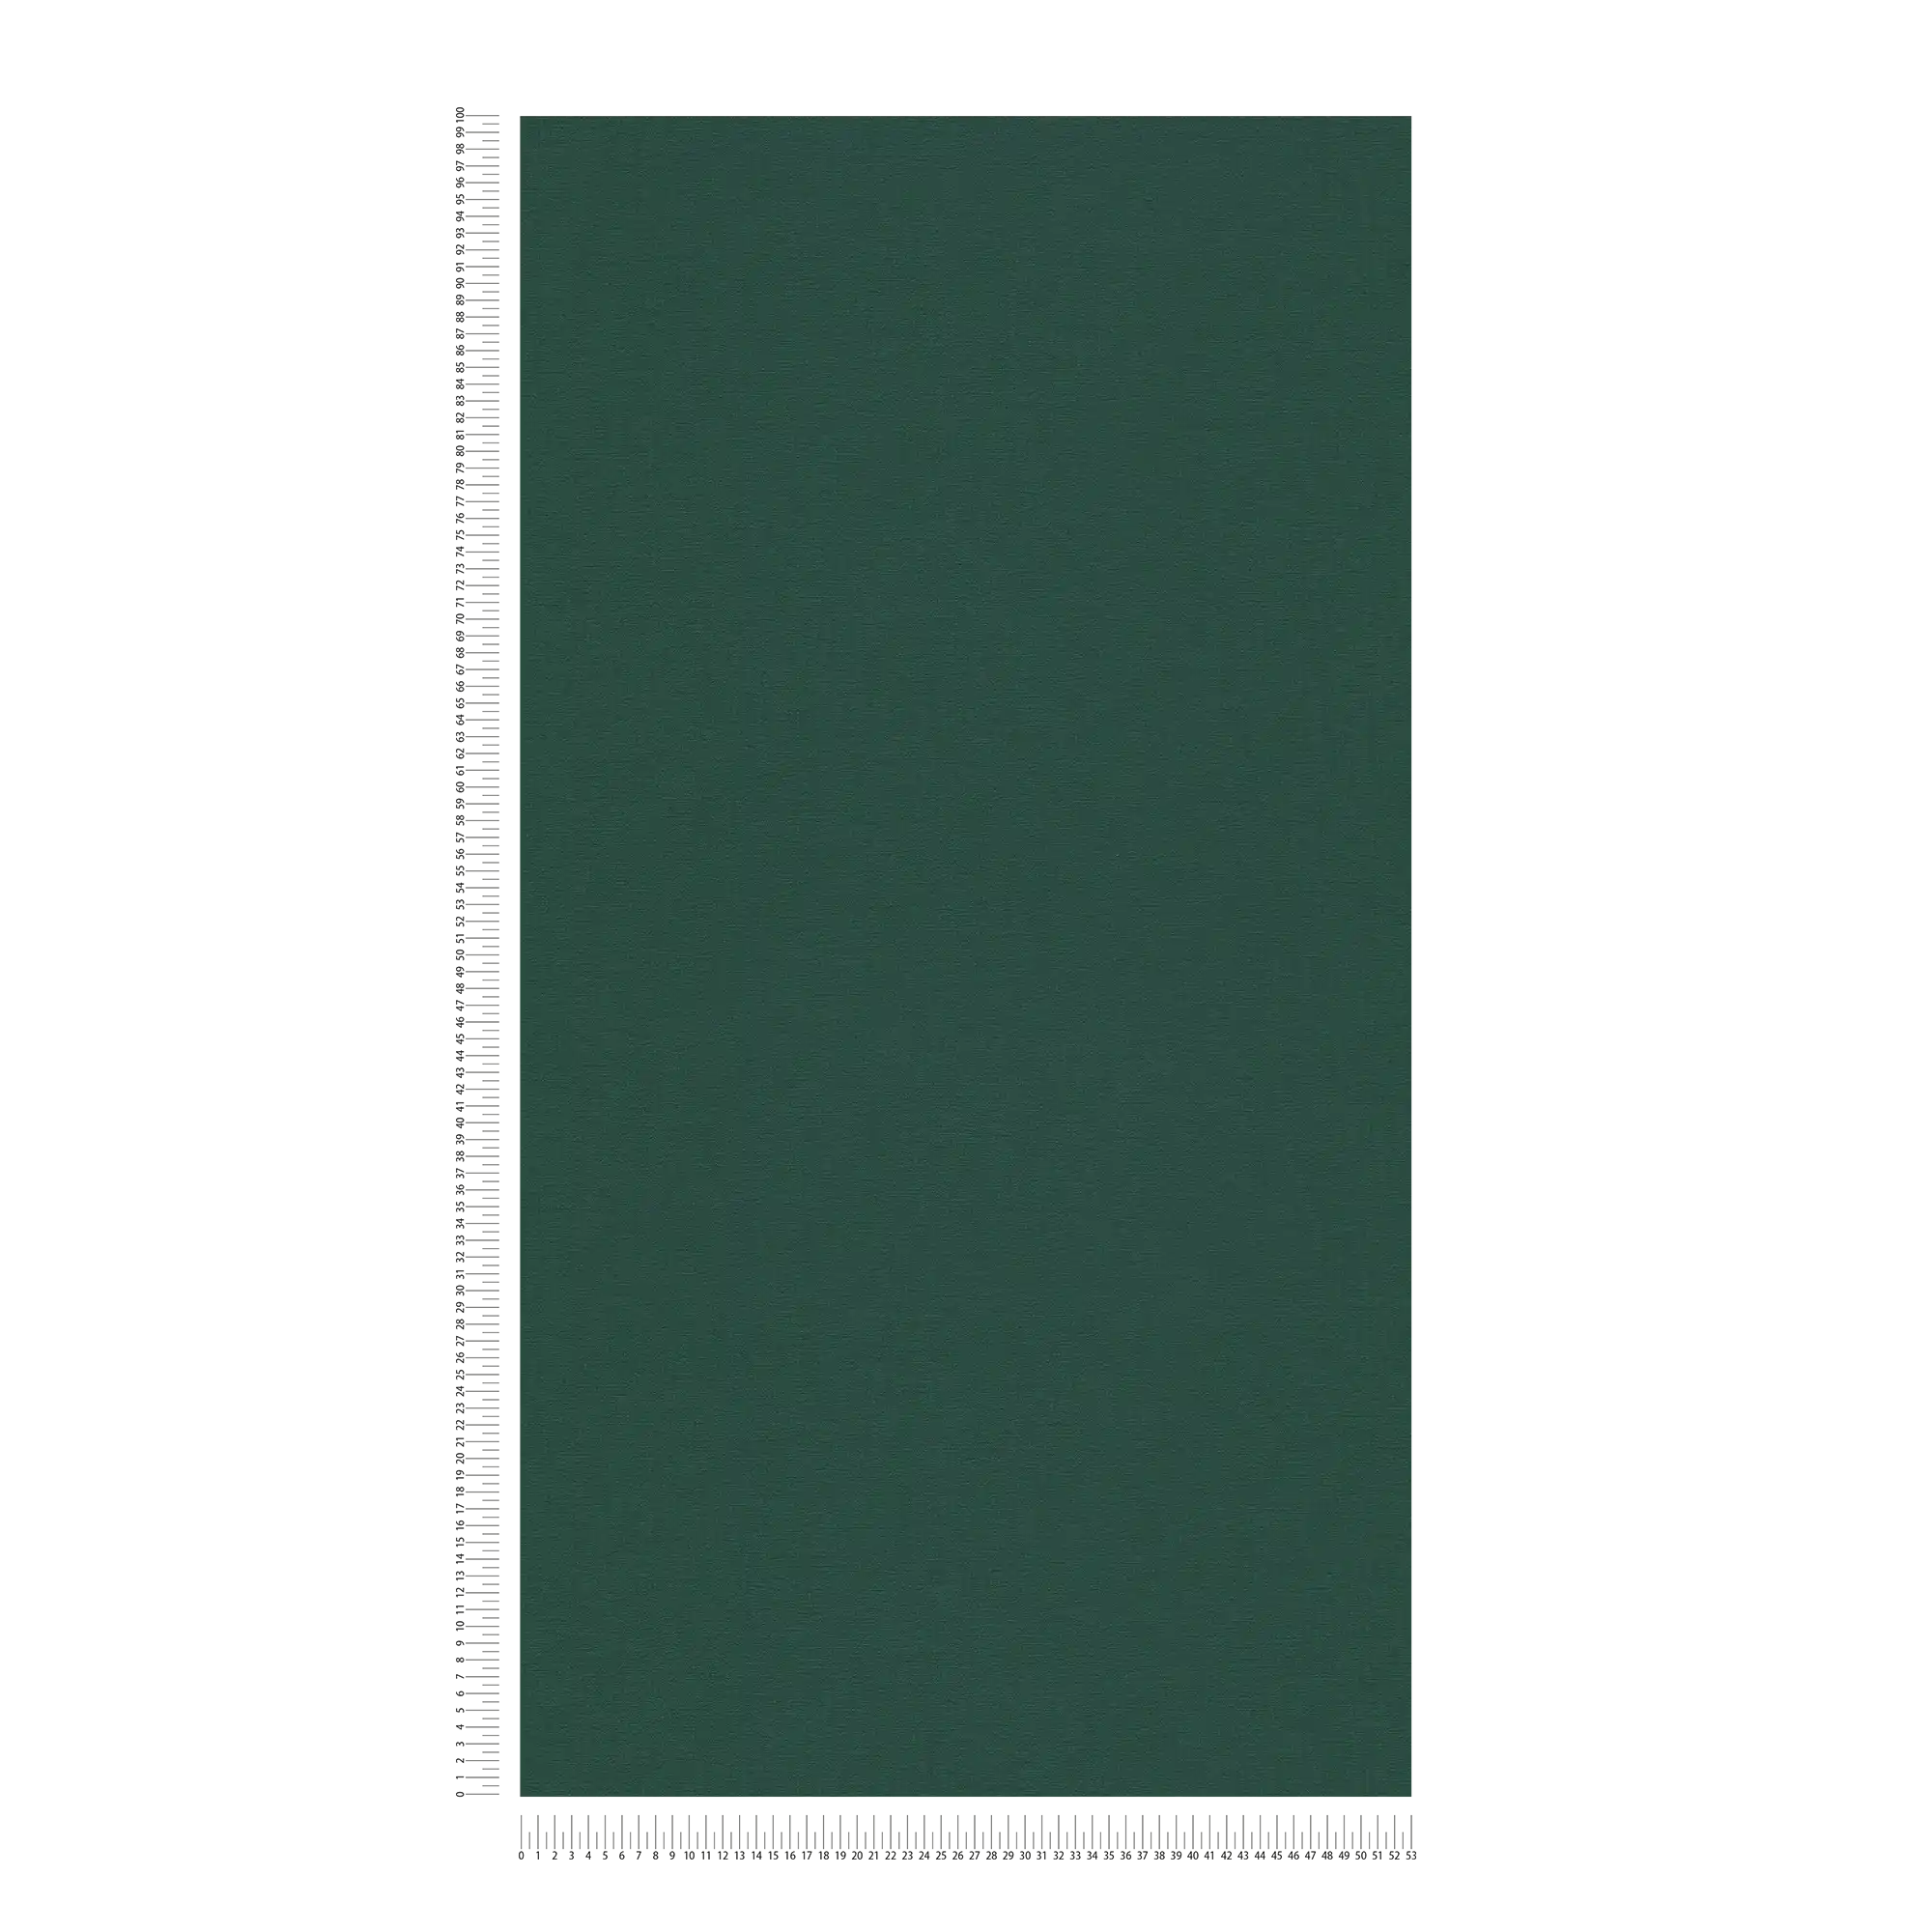             Unitapete mit Textilstruktur matt – Grün, Dunkelgrün
        